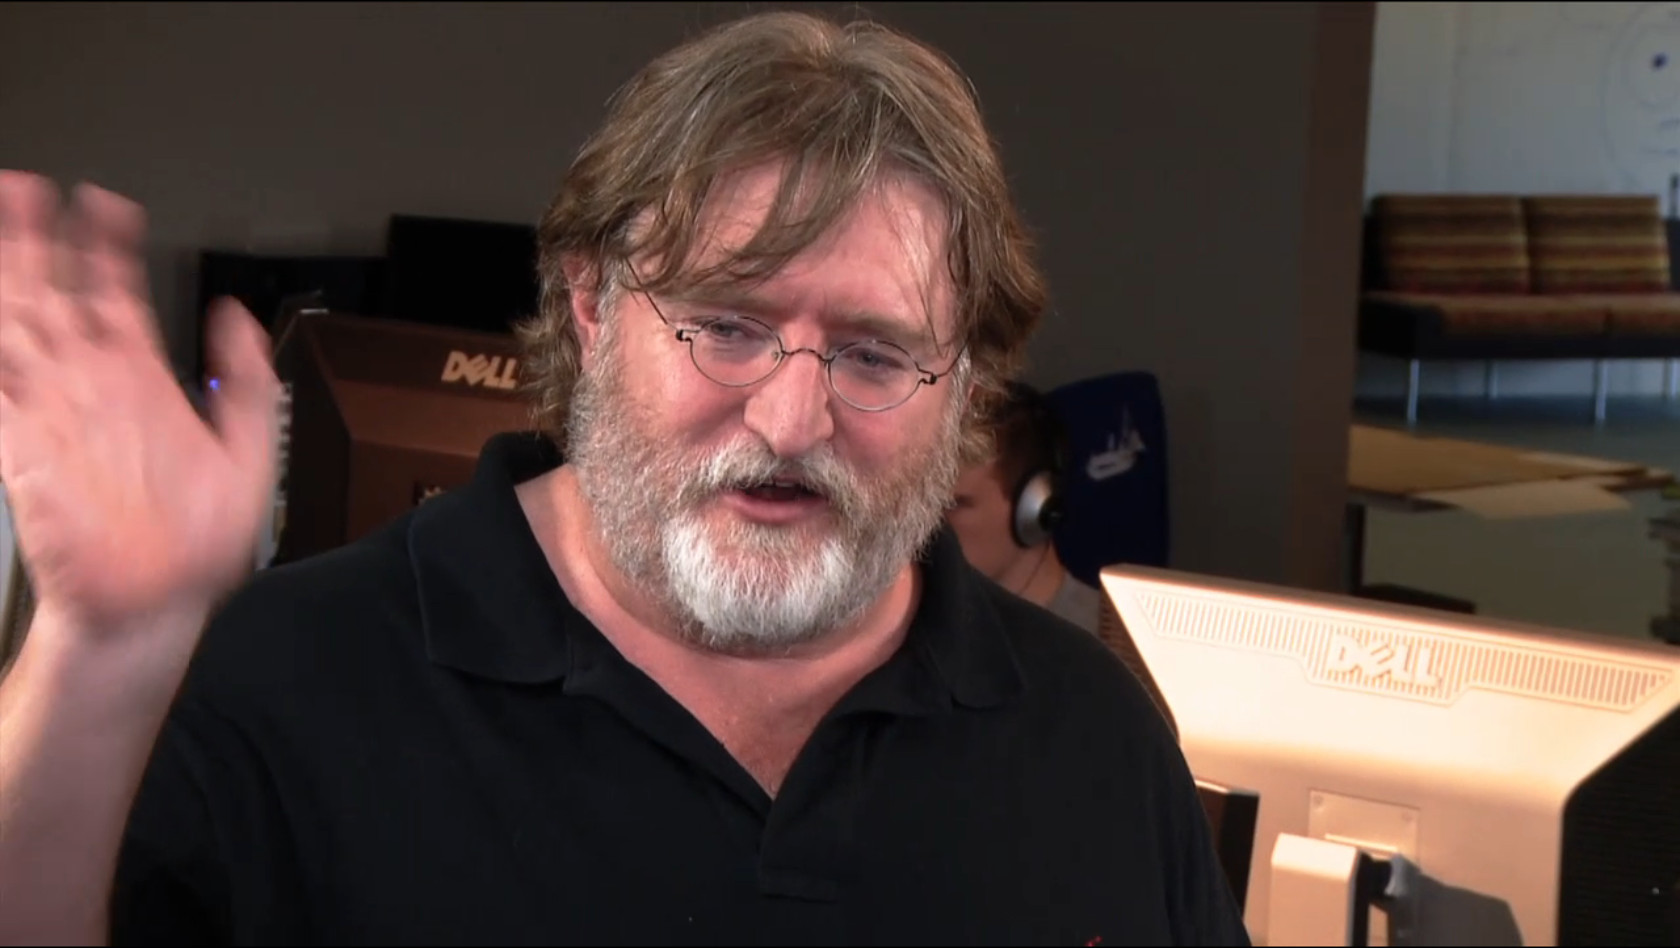 Gabe Newell Bio, Age, Wife, Lisa, Games, Half-Life 3, Dead, Net Worth